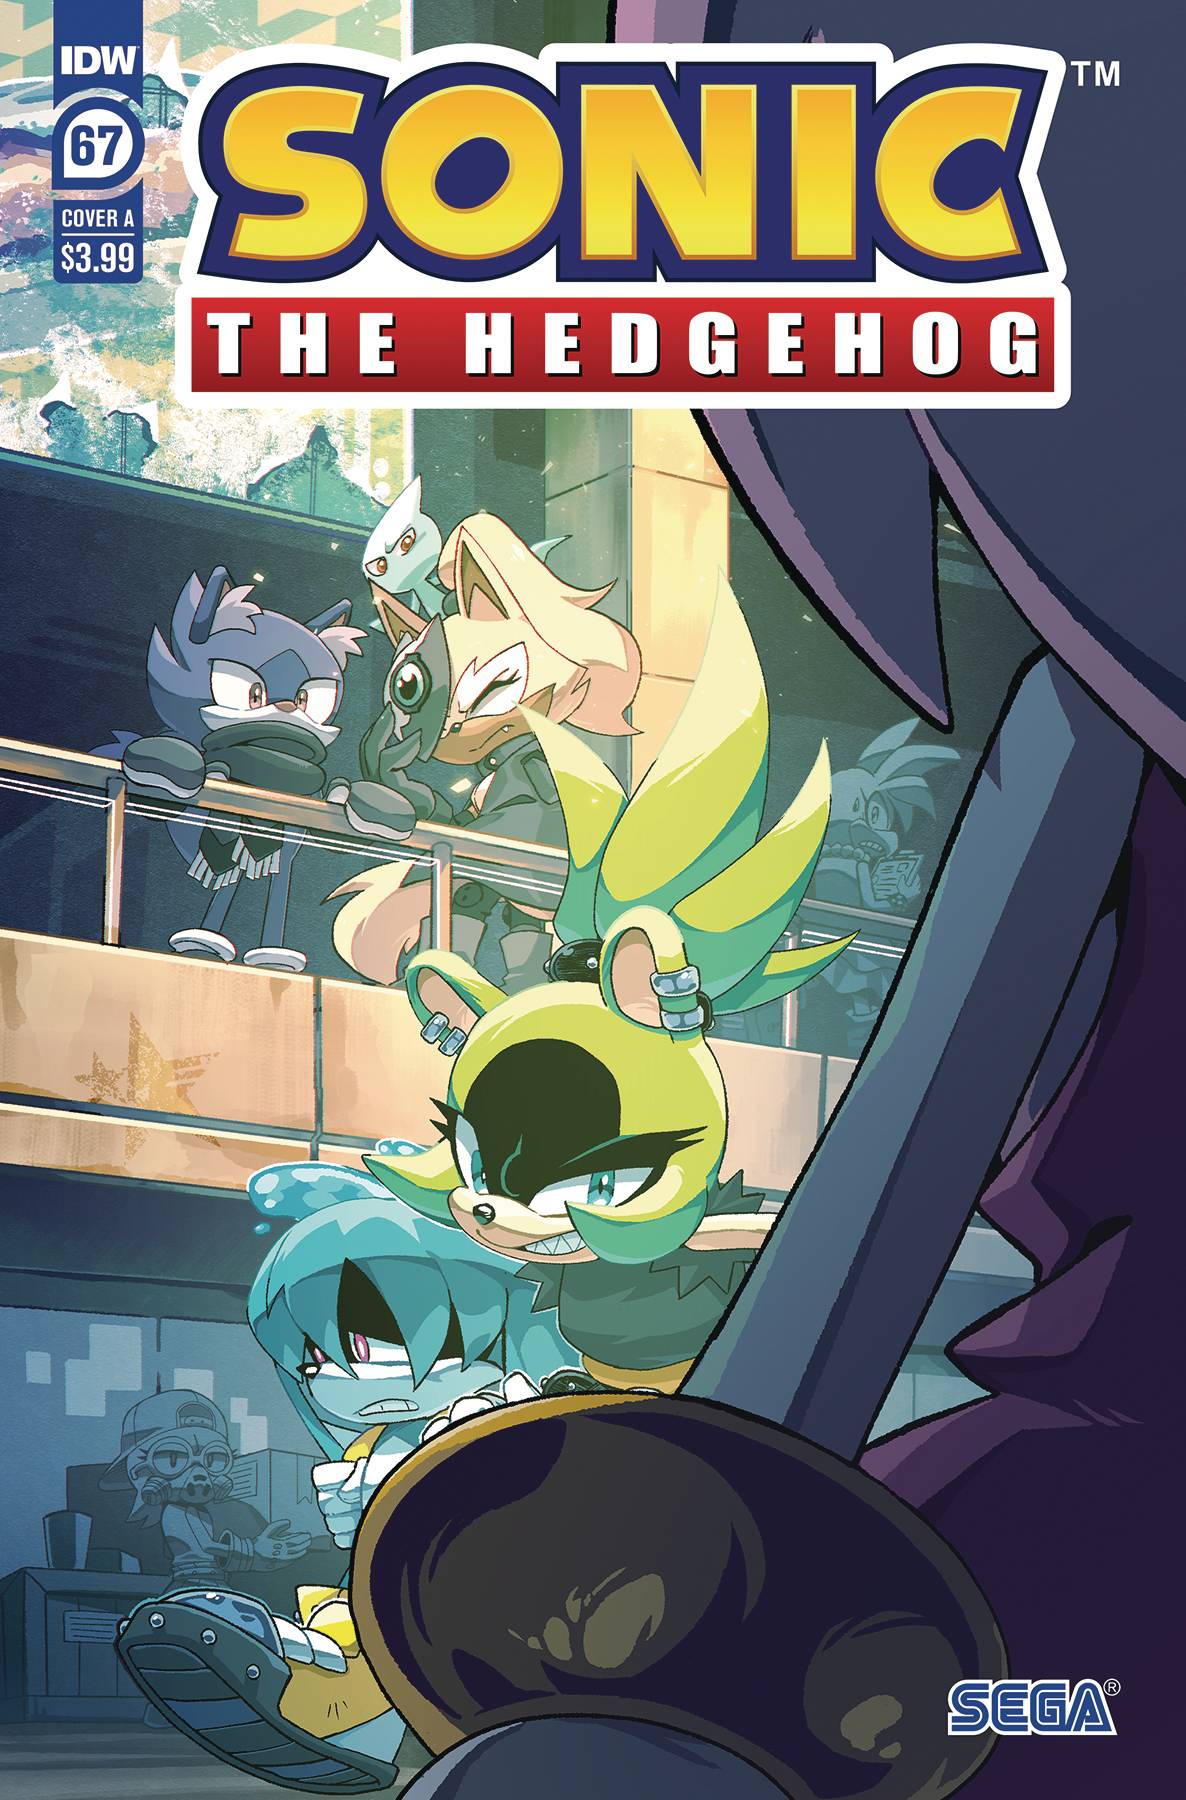 Sonic The Hedgehog Mega Man Worlds Unite - Prelude FCBD (2015) Archie